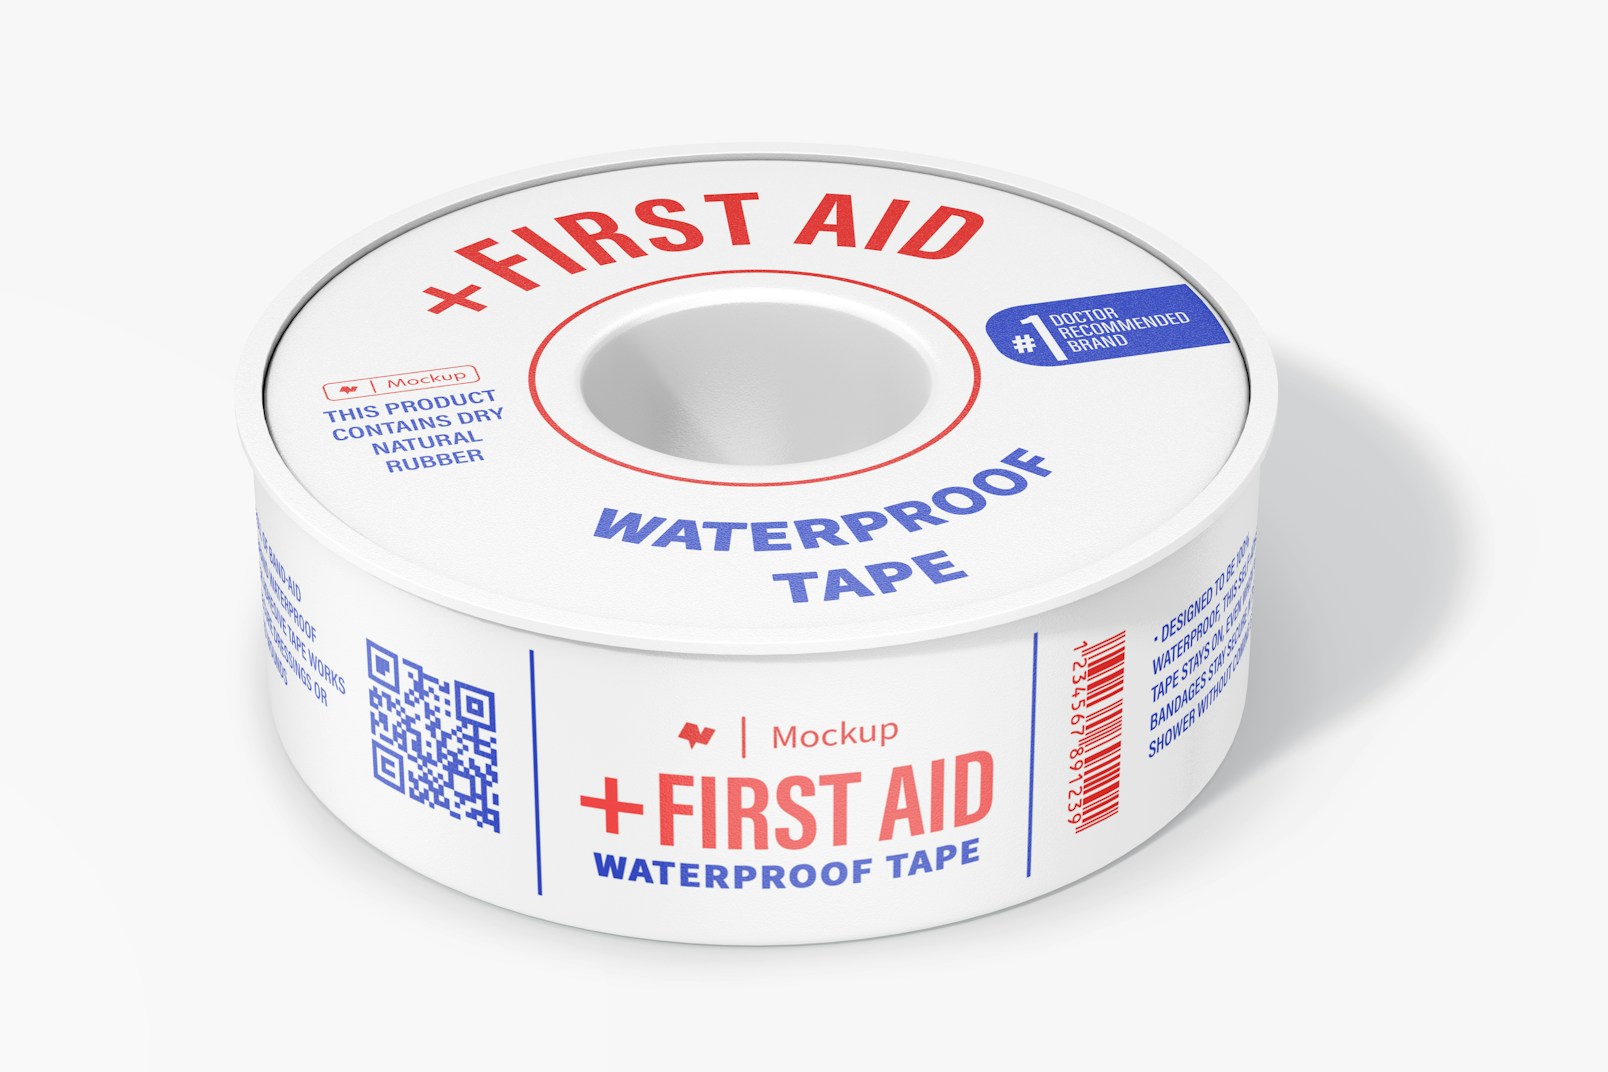 First Aid Waterproof Tape Mockup